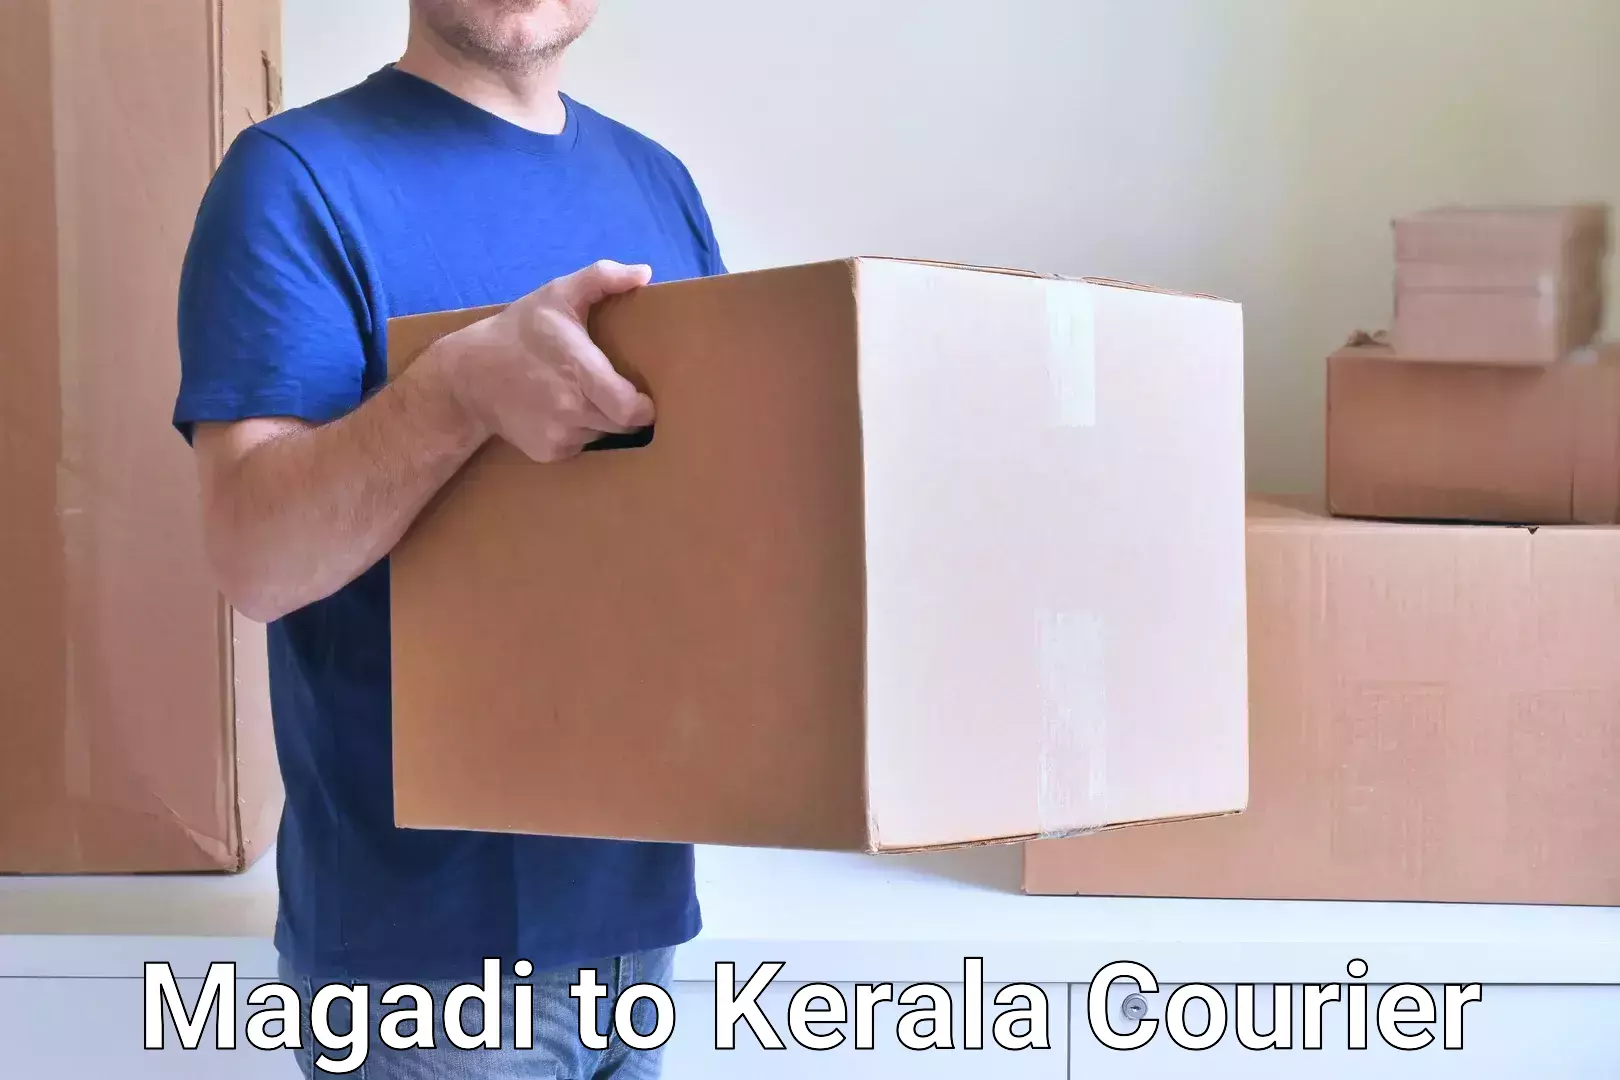 Affordable international shipping Magadi to Cochin Port Kochi